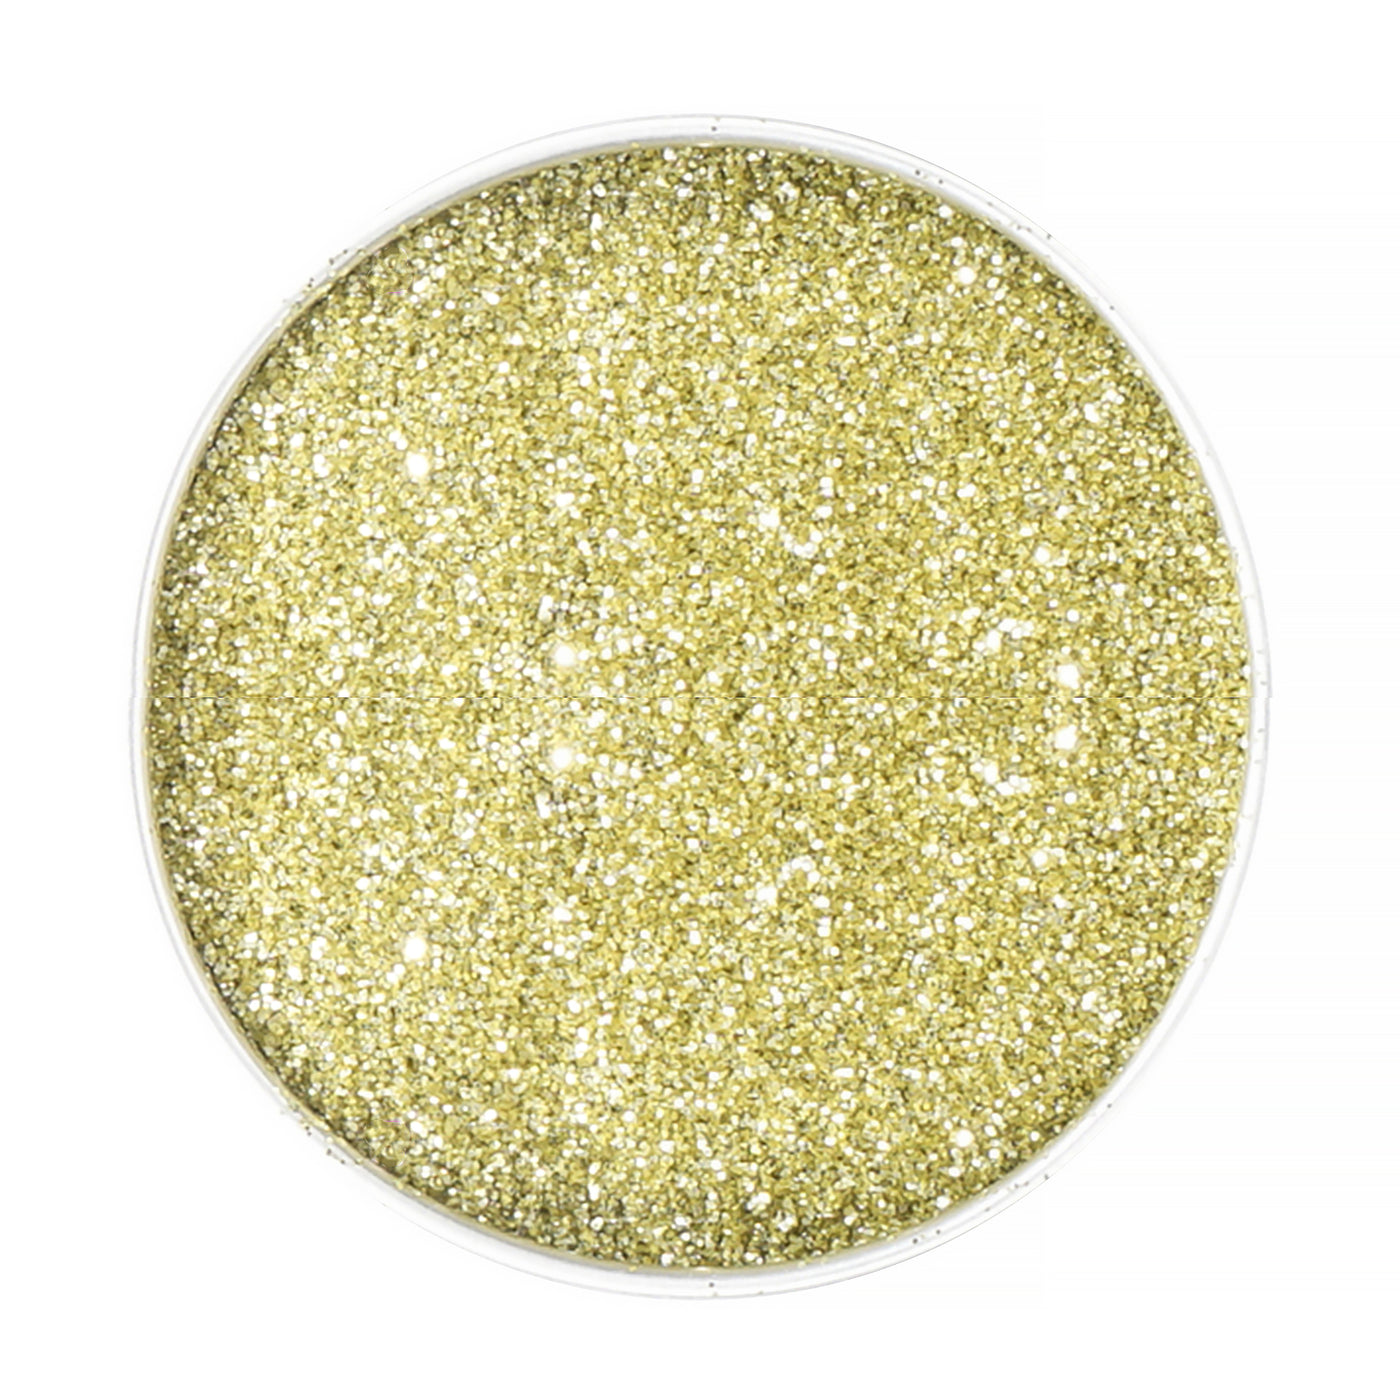 Gold Biodegradable Cosmetic Glitter